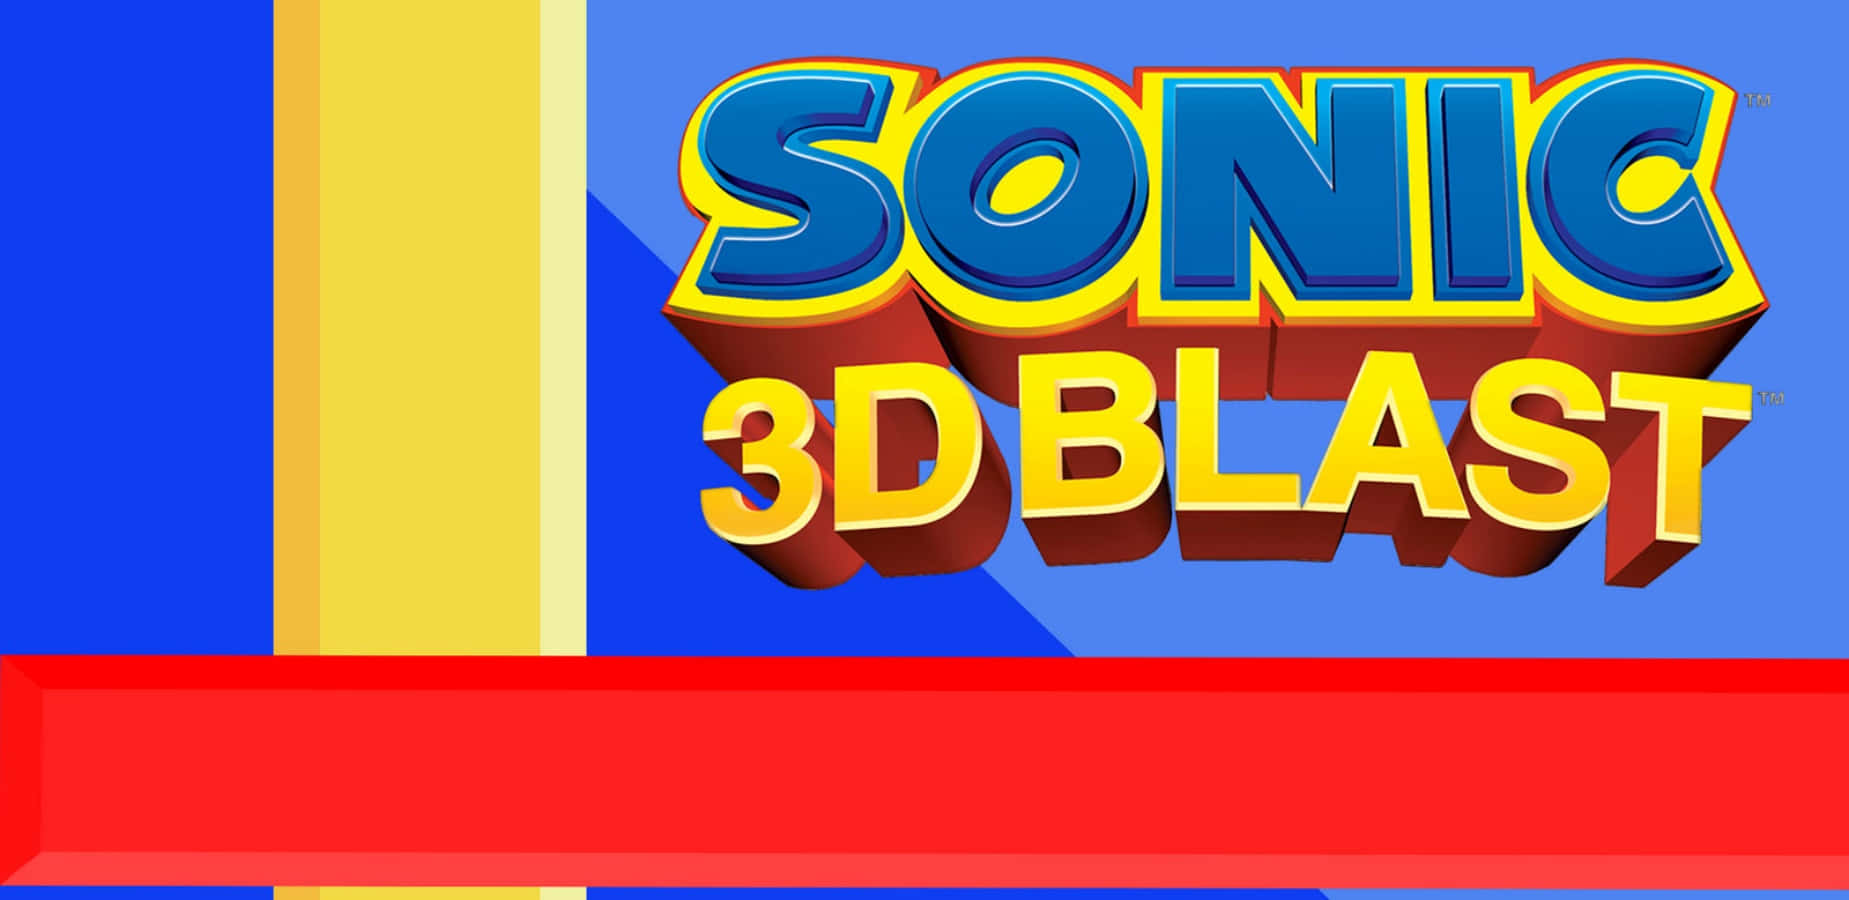 Sonic 3D Blast gameplay in action Wallpaper